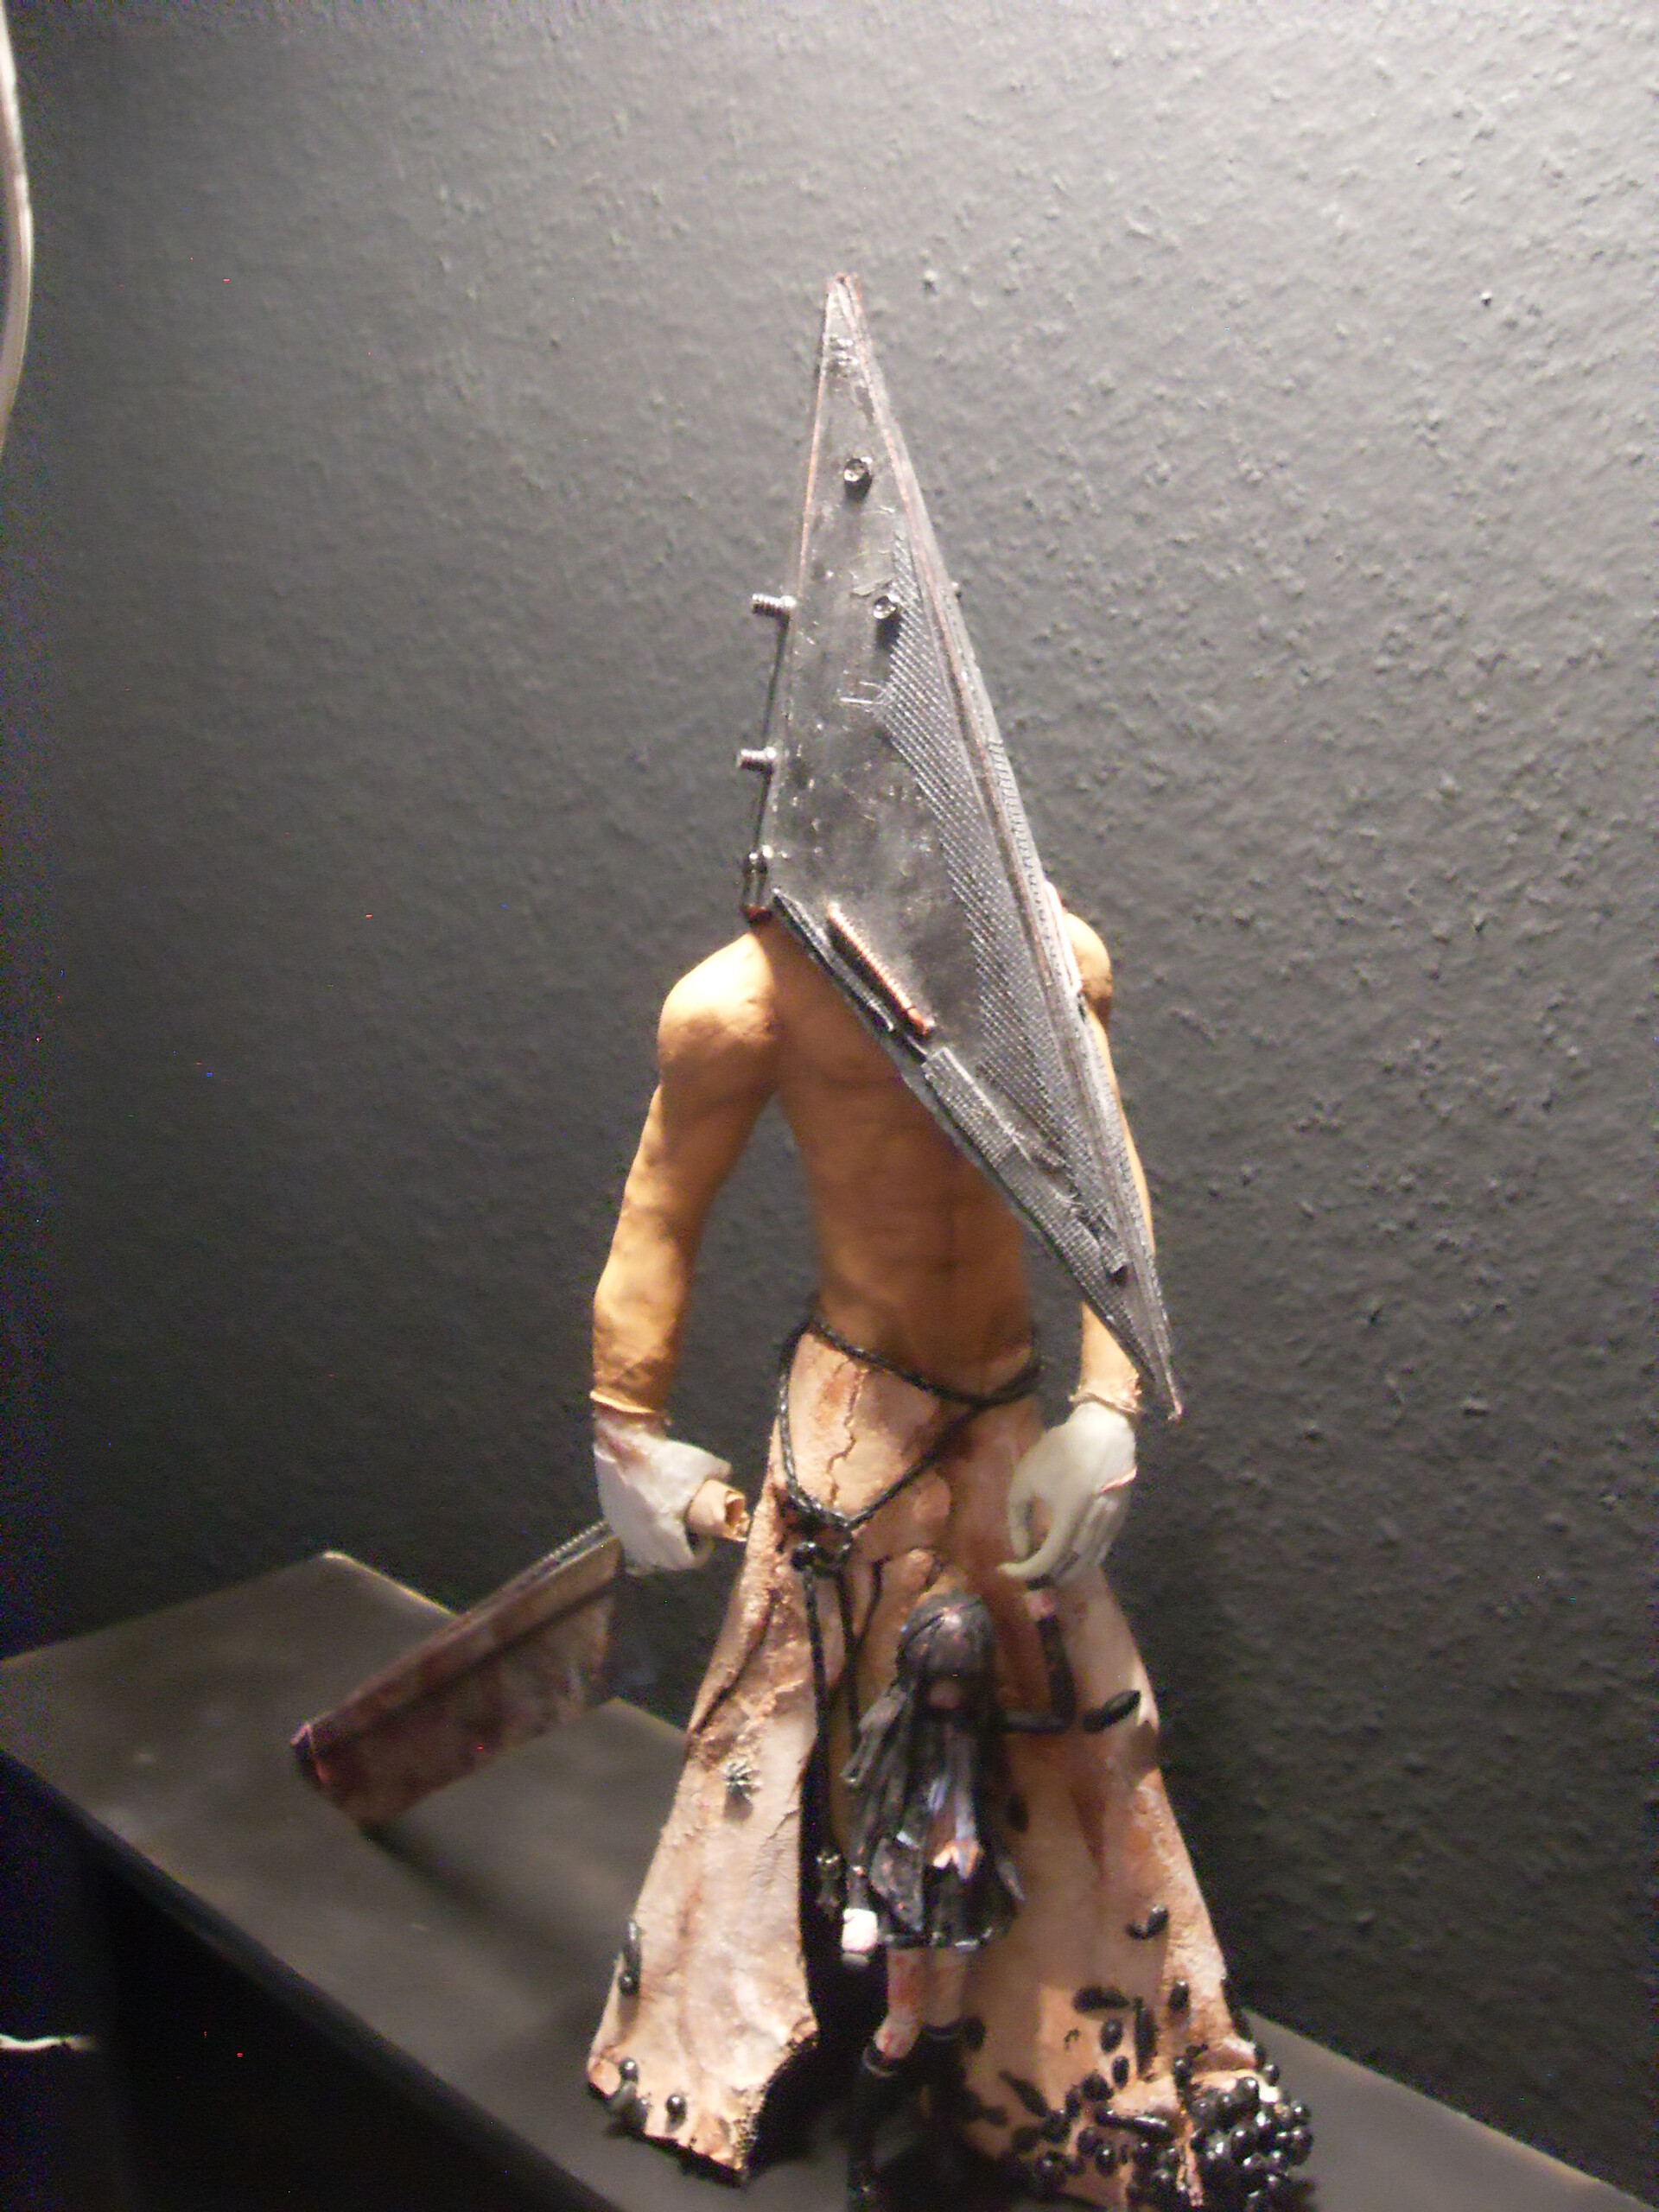 Action Figure Pyramid Head